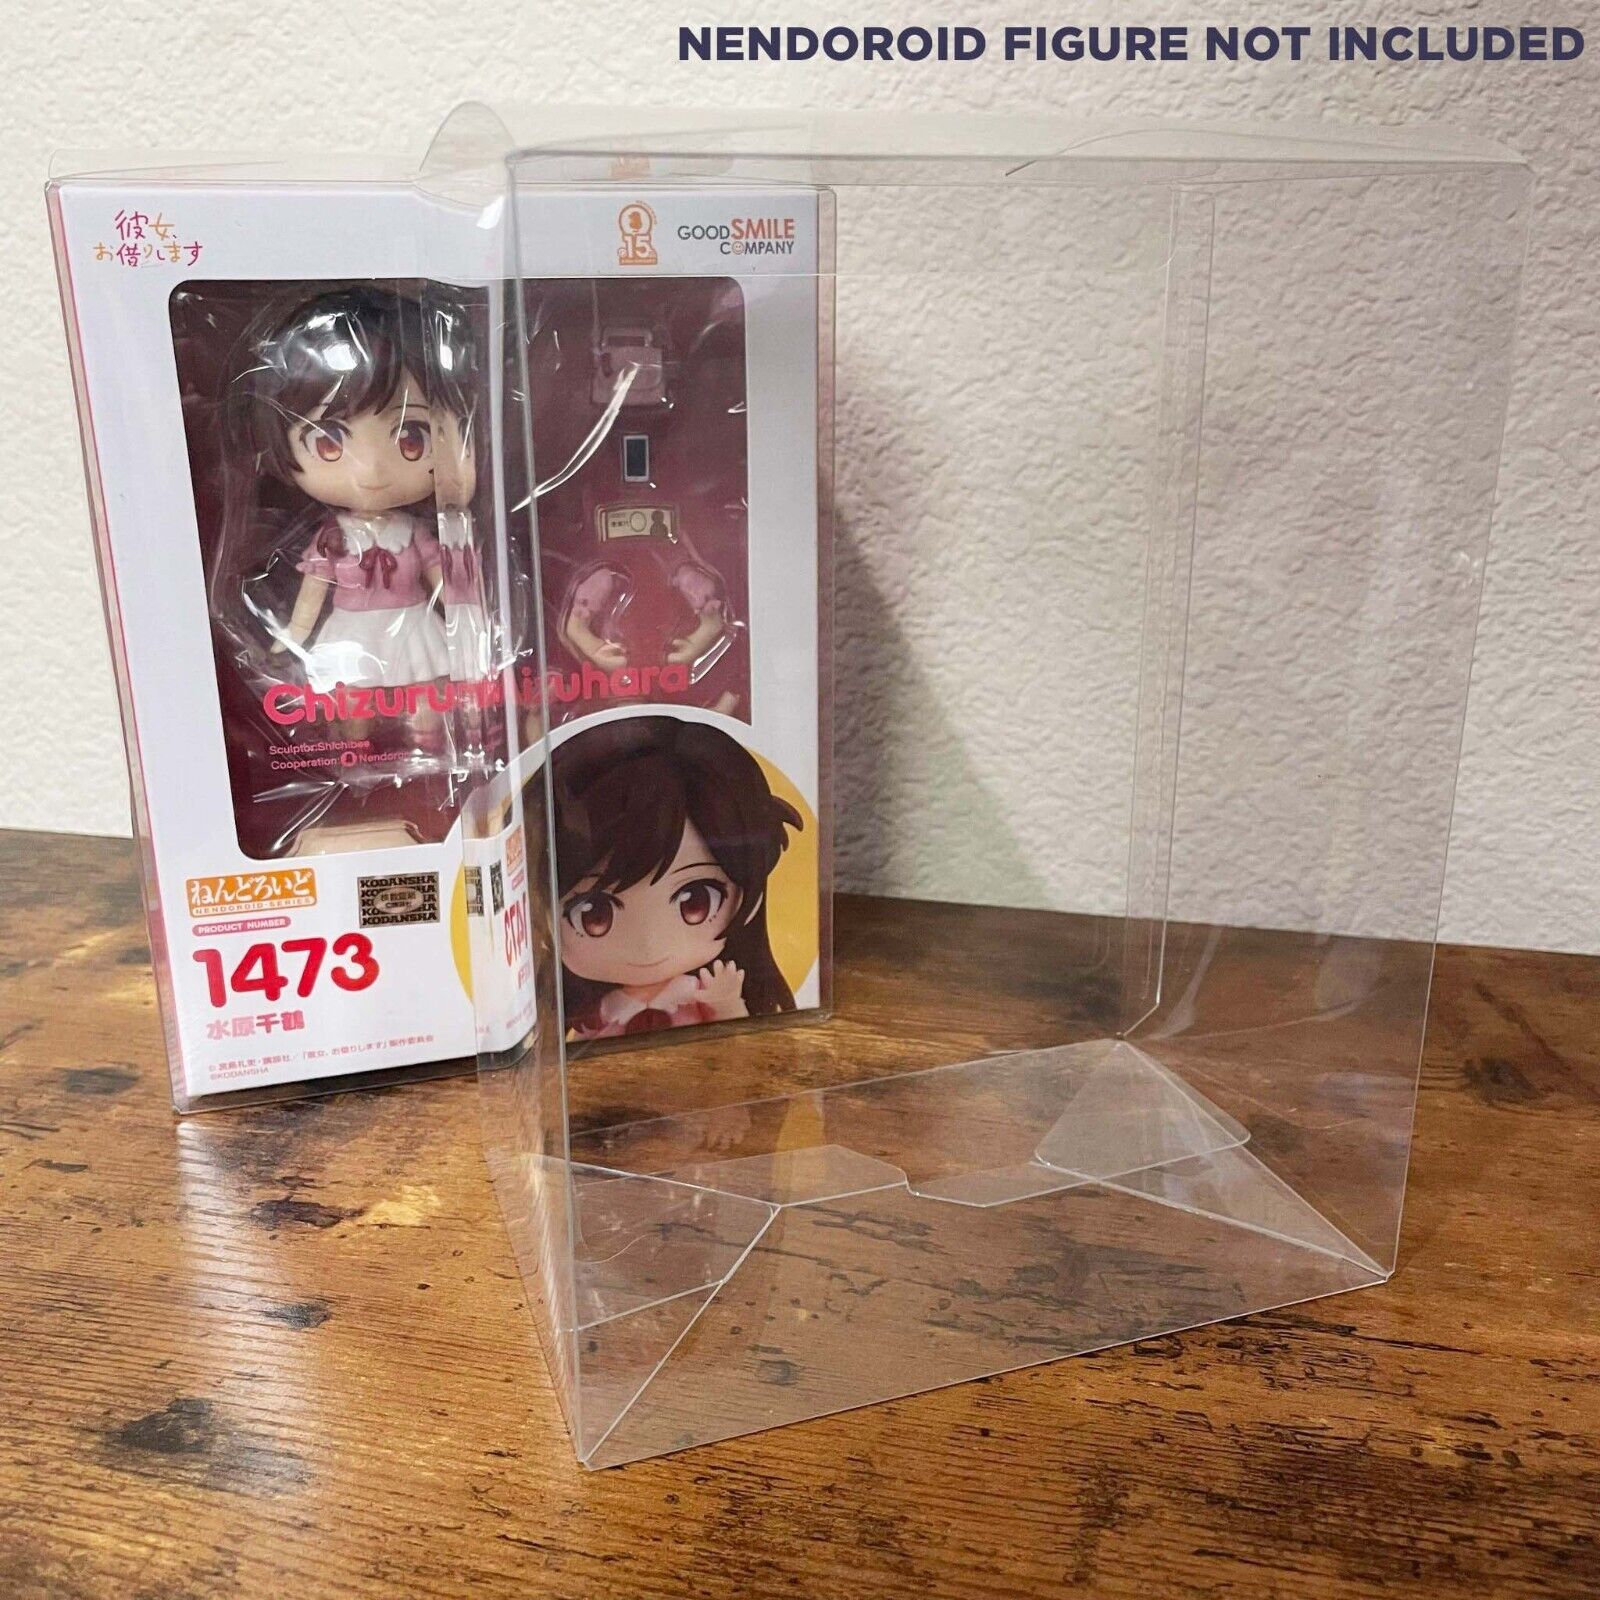 Nendoroid Clear Box Protector | Auto Lock Bottom & Protective Film | Std. Size